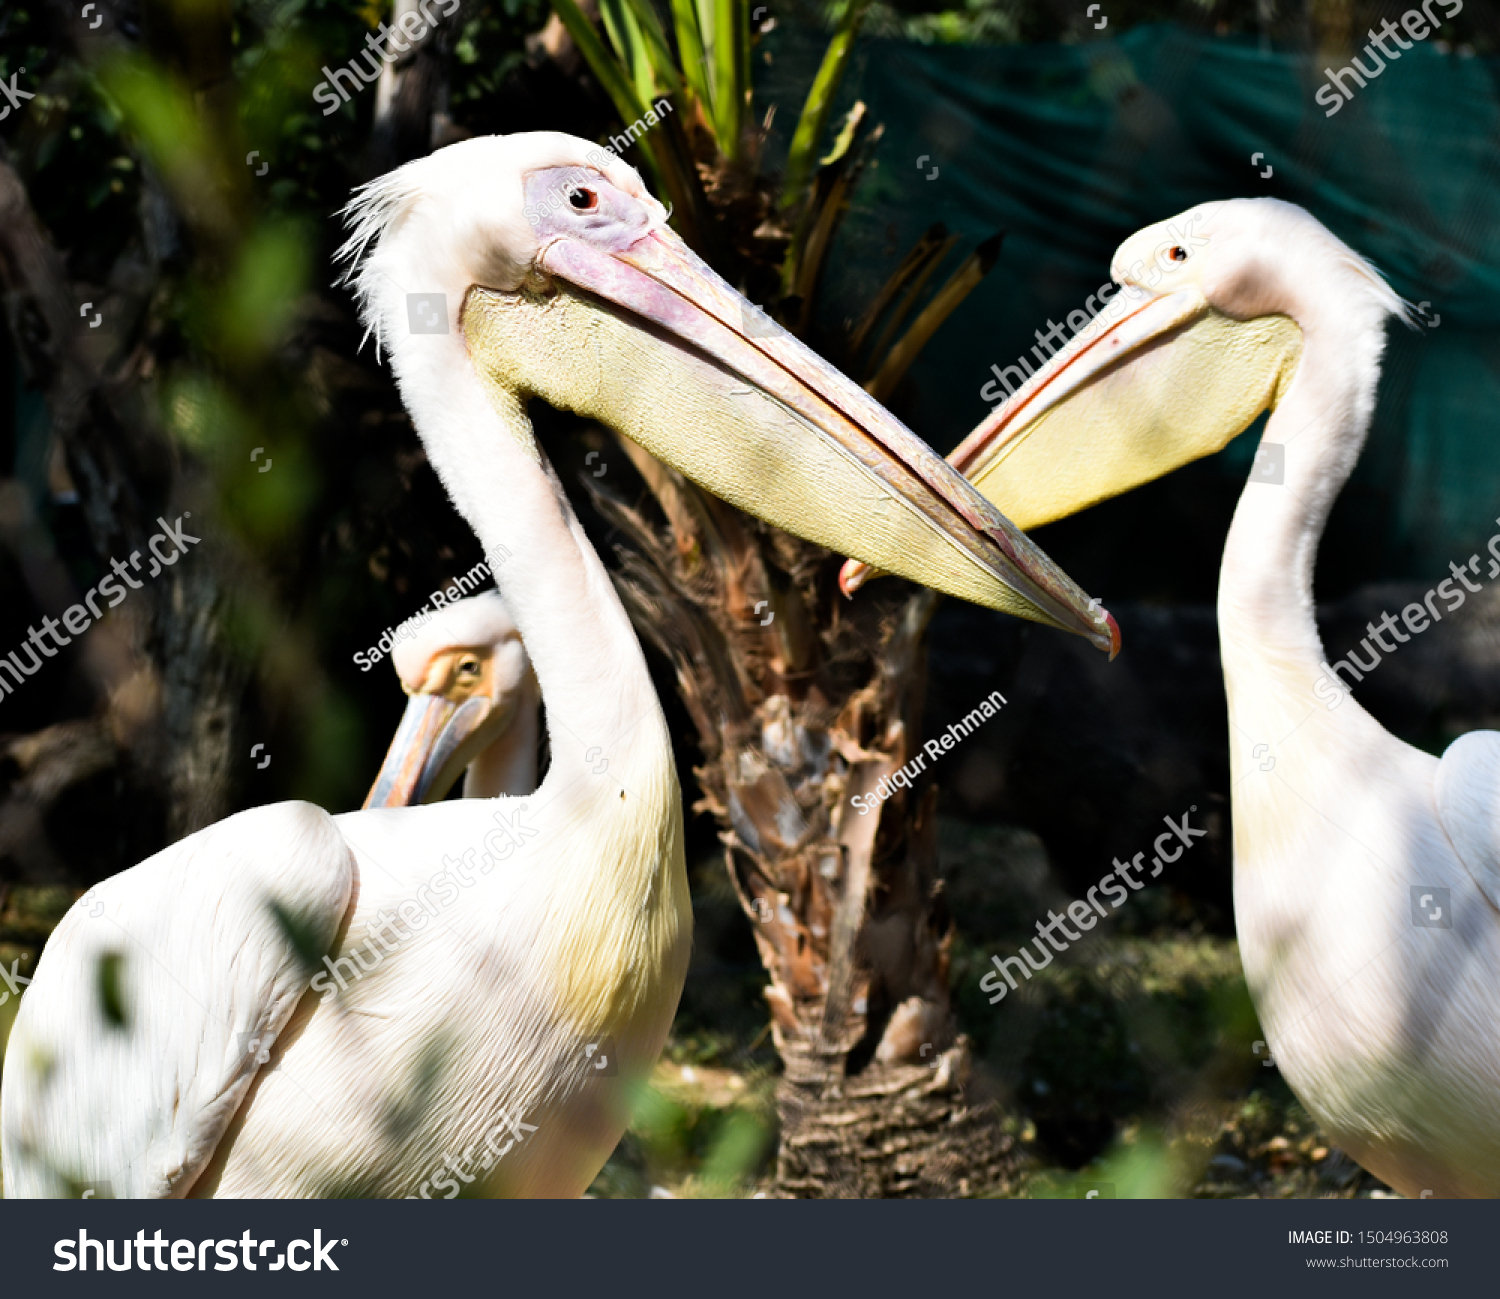 Beautifully lit picture of opposite facing pelican birds.  #1504963808